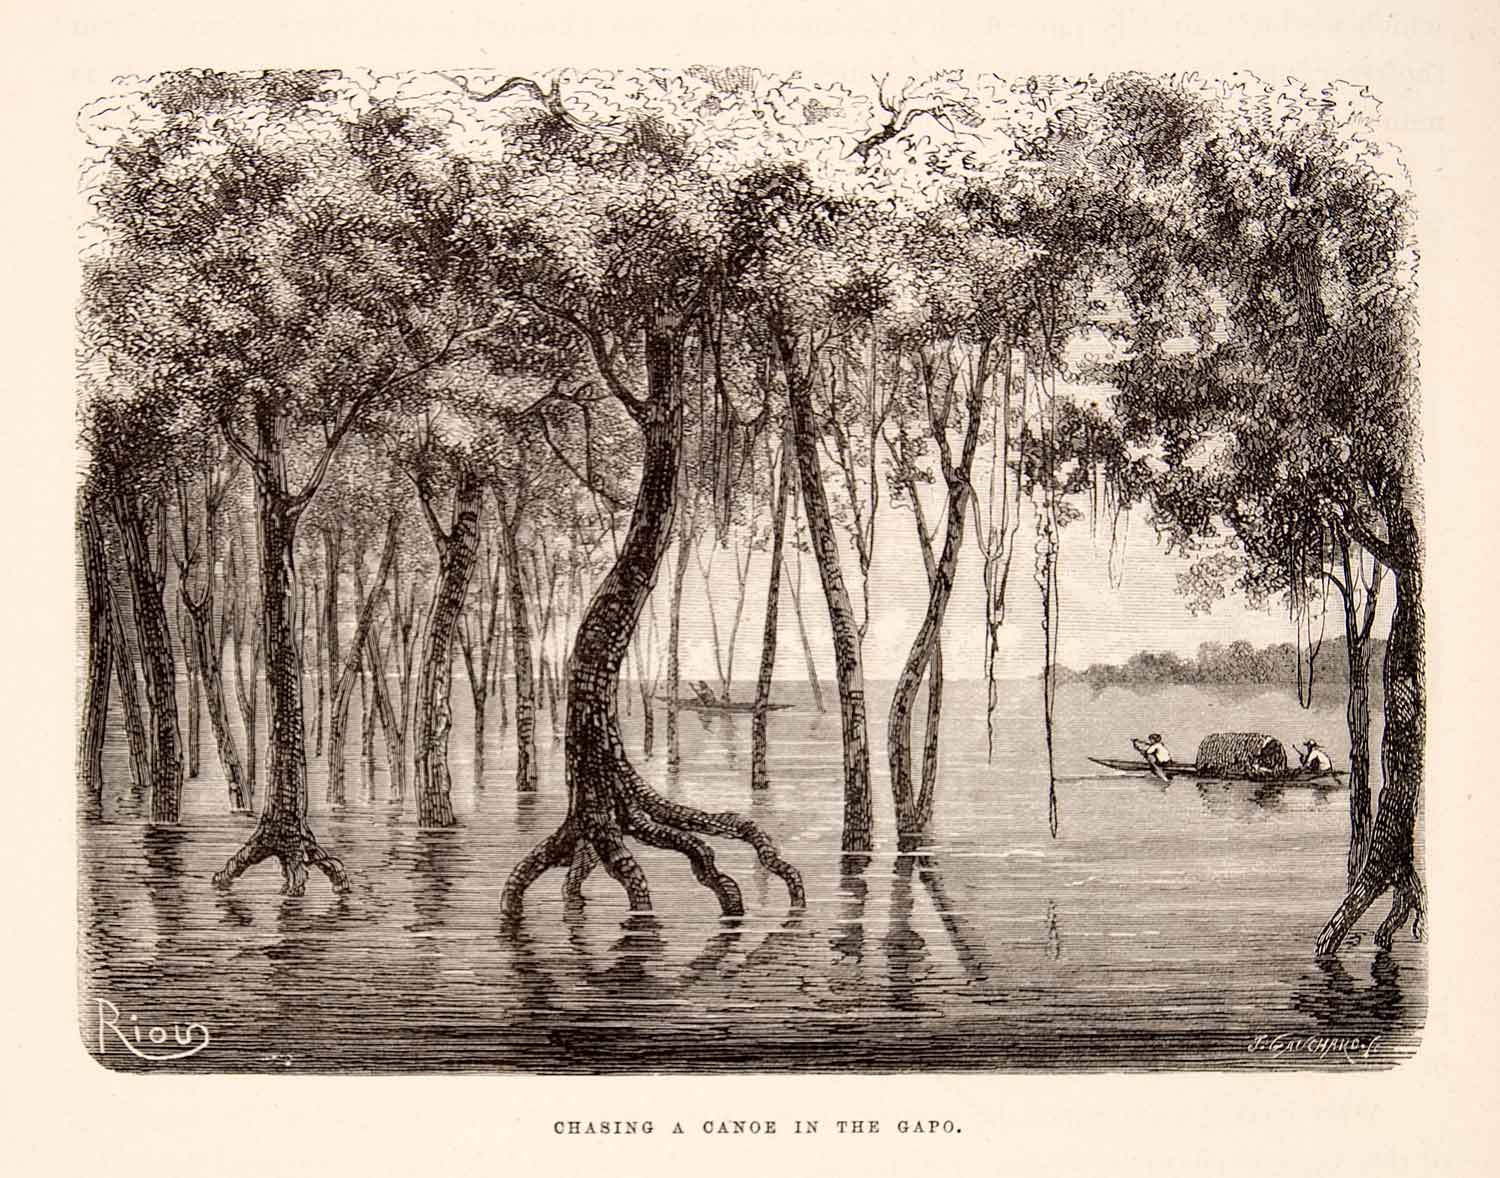 1875 Wood Engraving Canoe Chase Gapo Grove Brazil Amazon River South XGHC1